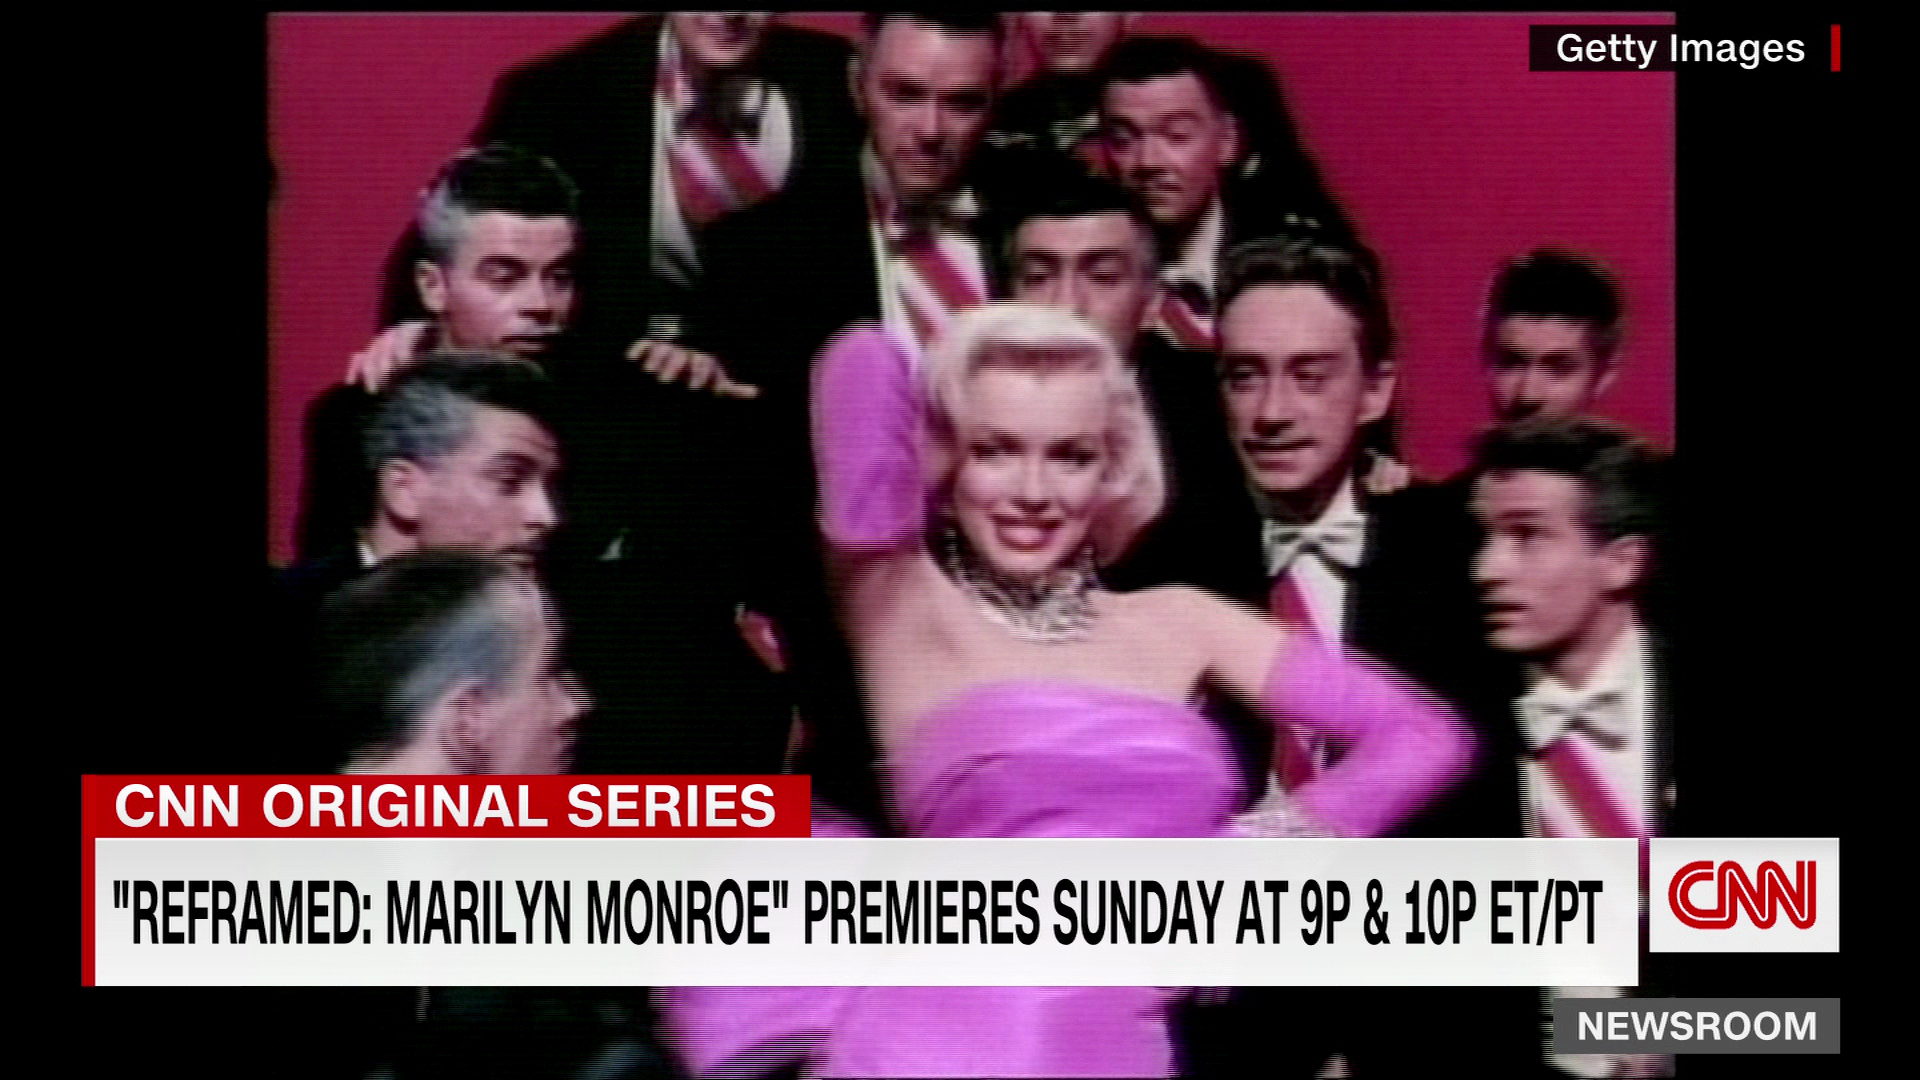 Experts reveal how Marilyn Monroe was a feminist trailblazer